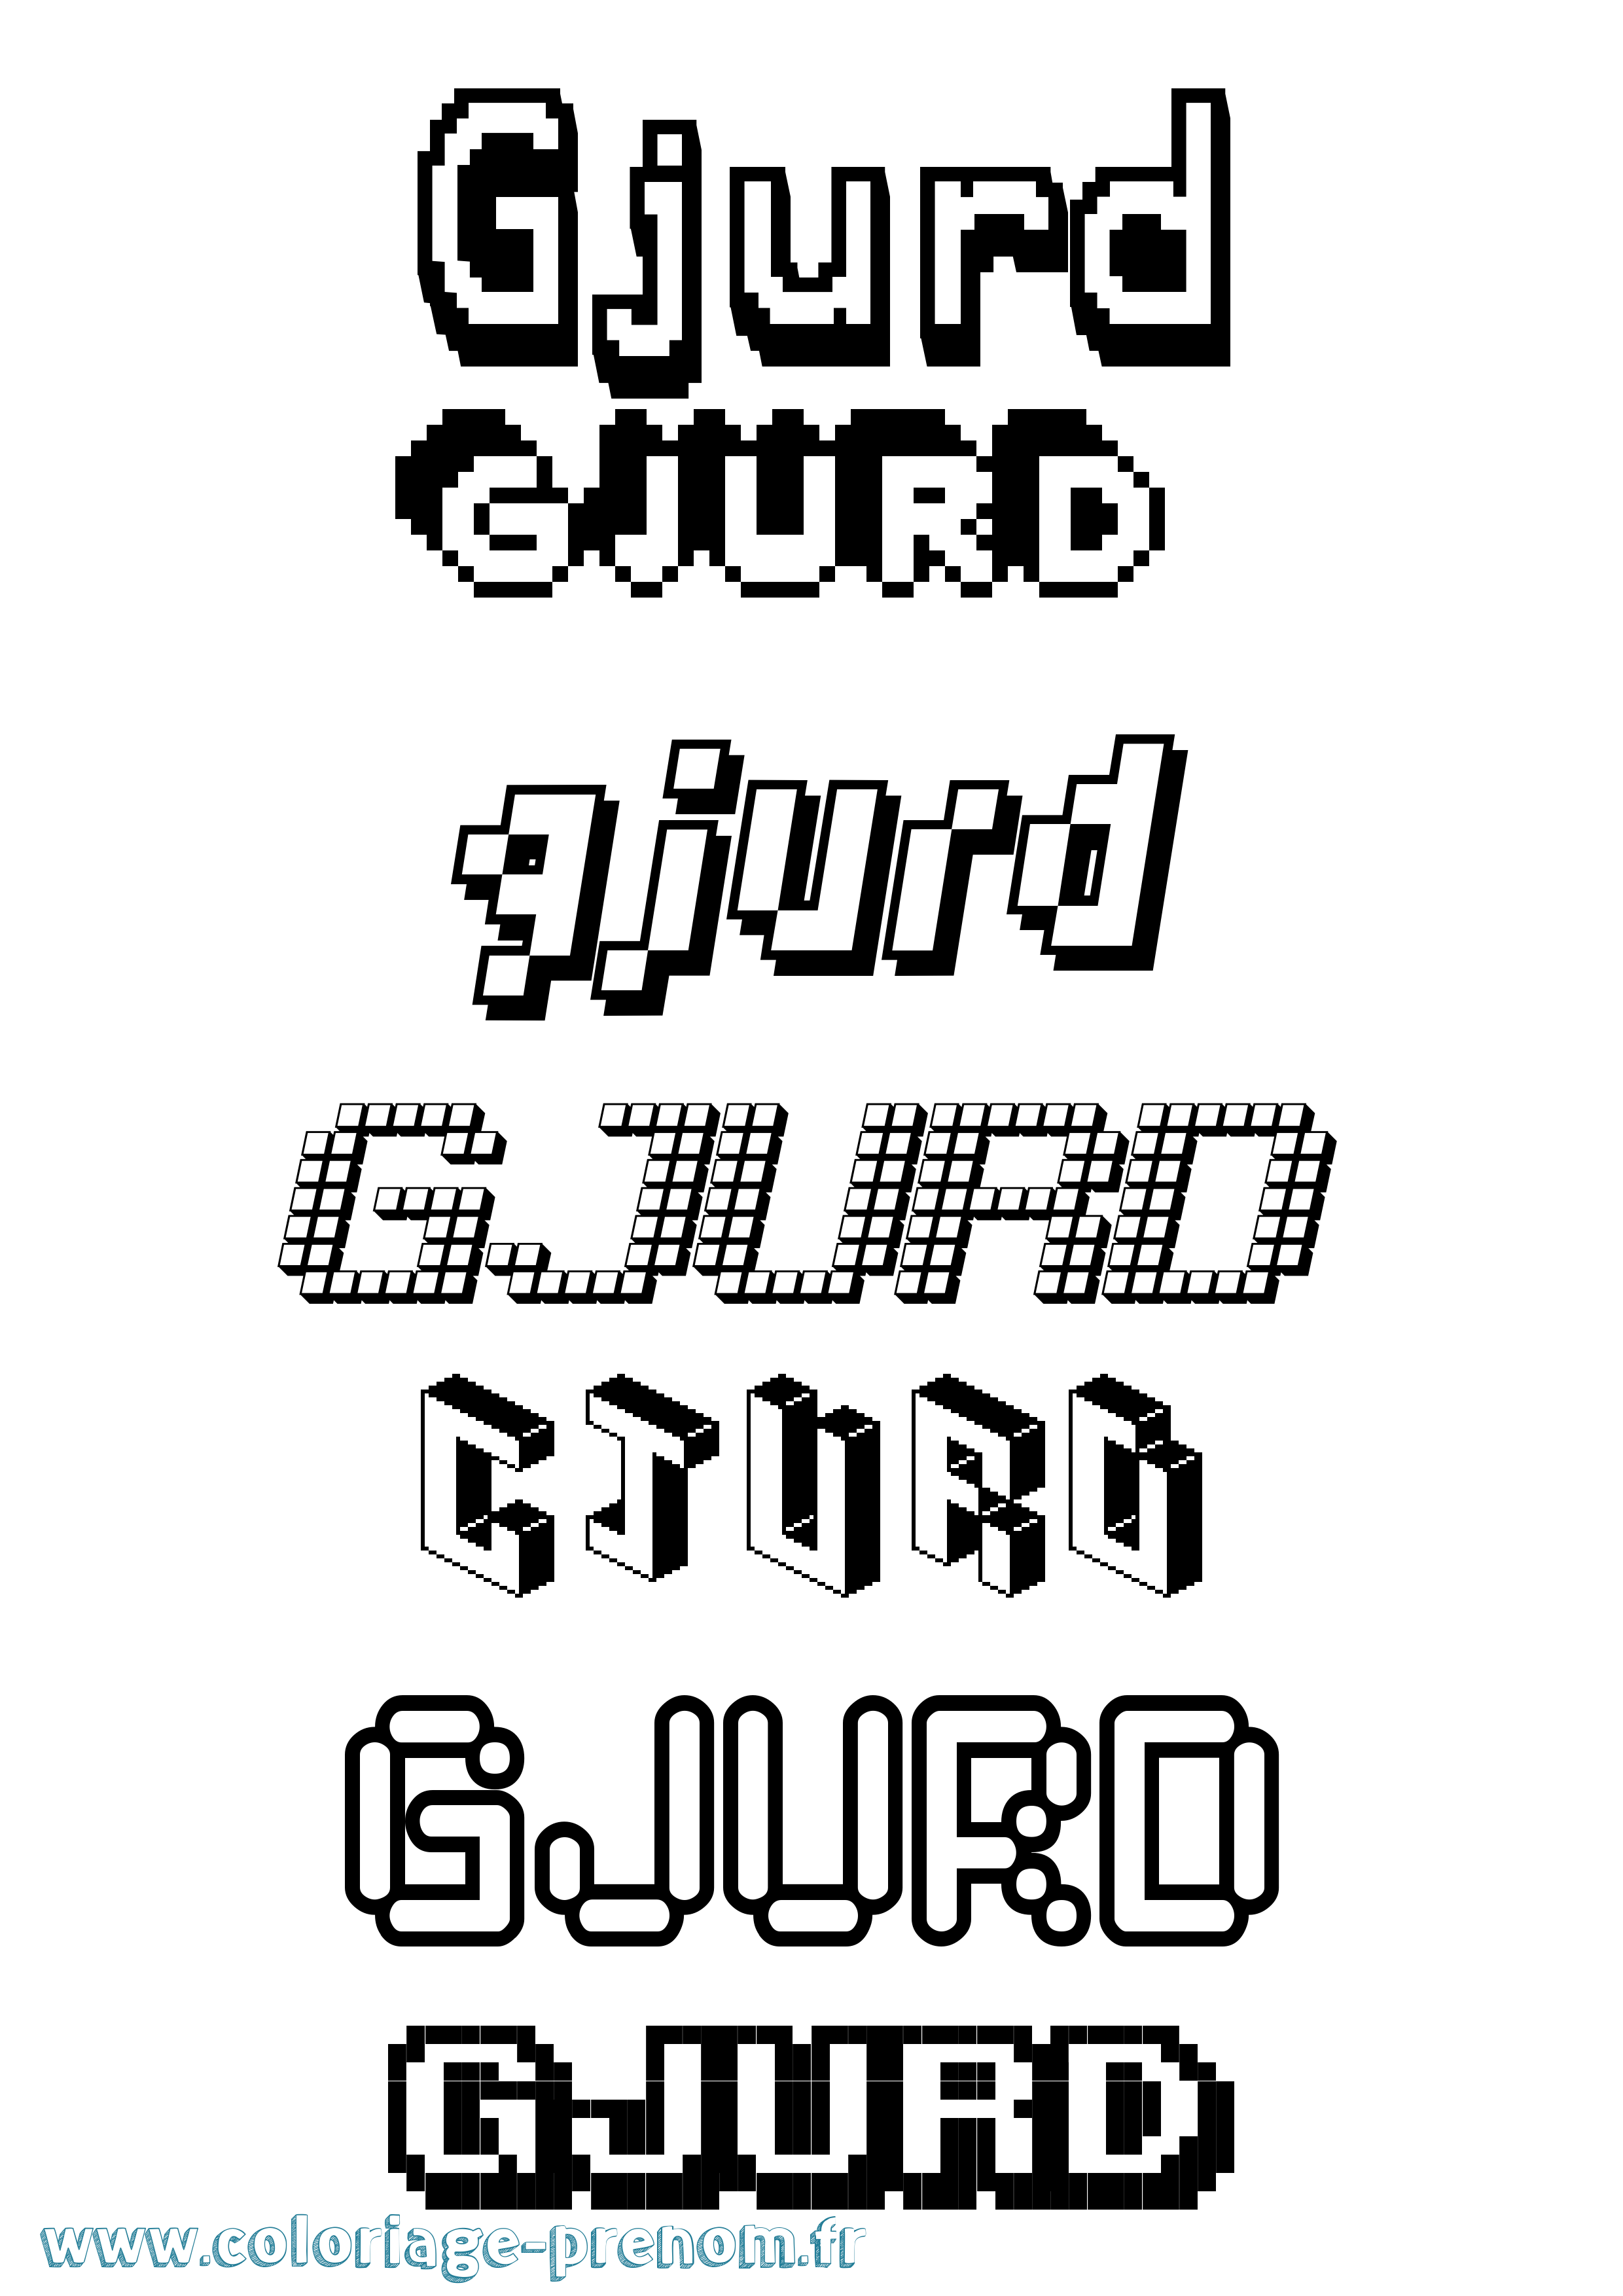 Coloriage prénom Gjurd Pixel